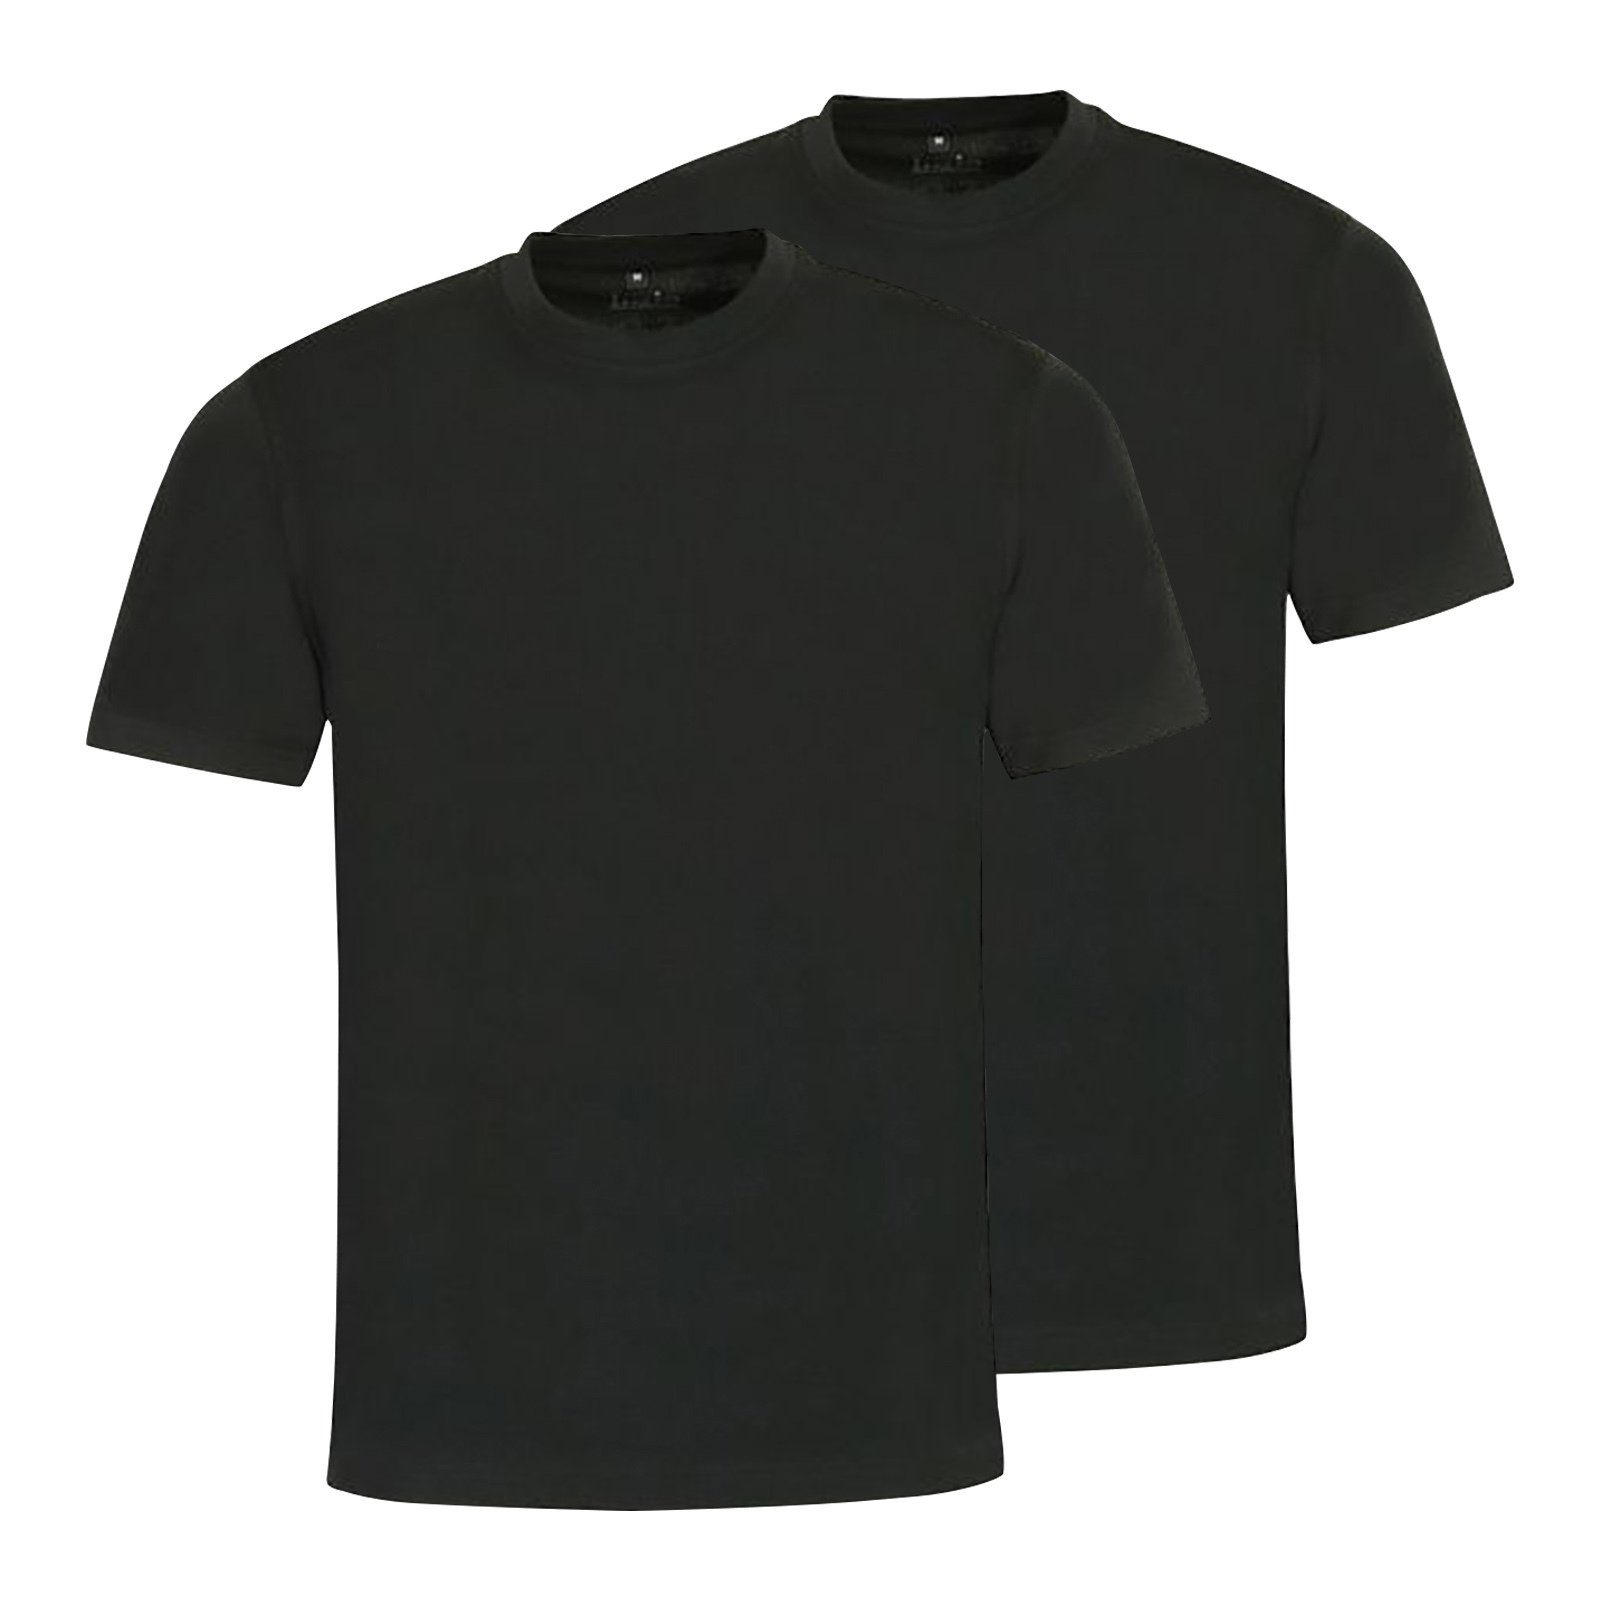 Super günstiger Sonderpreis Hajo T-Shirt Basic, Herren 2er Pack Schwarz - T-Shirt, Kurzarm